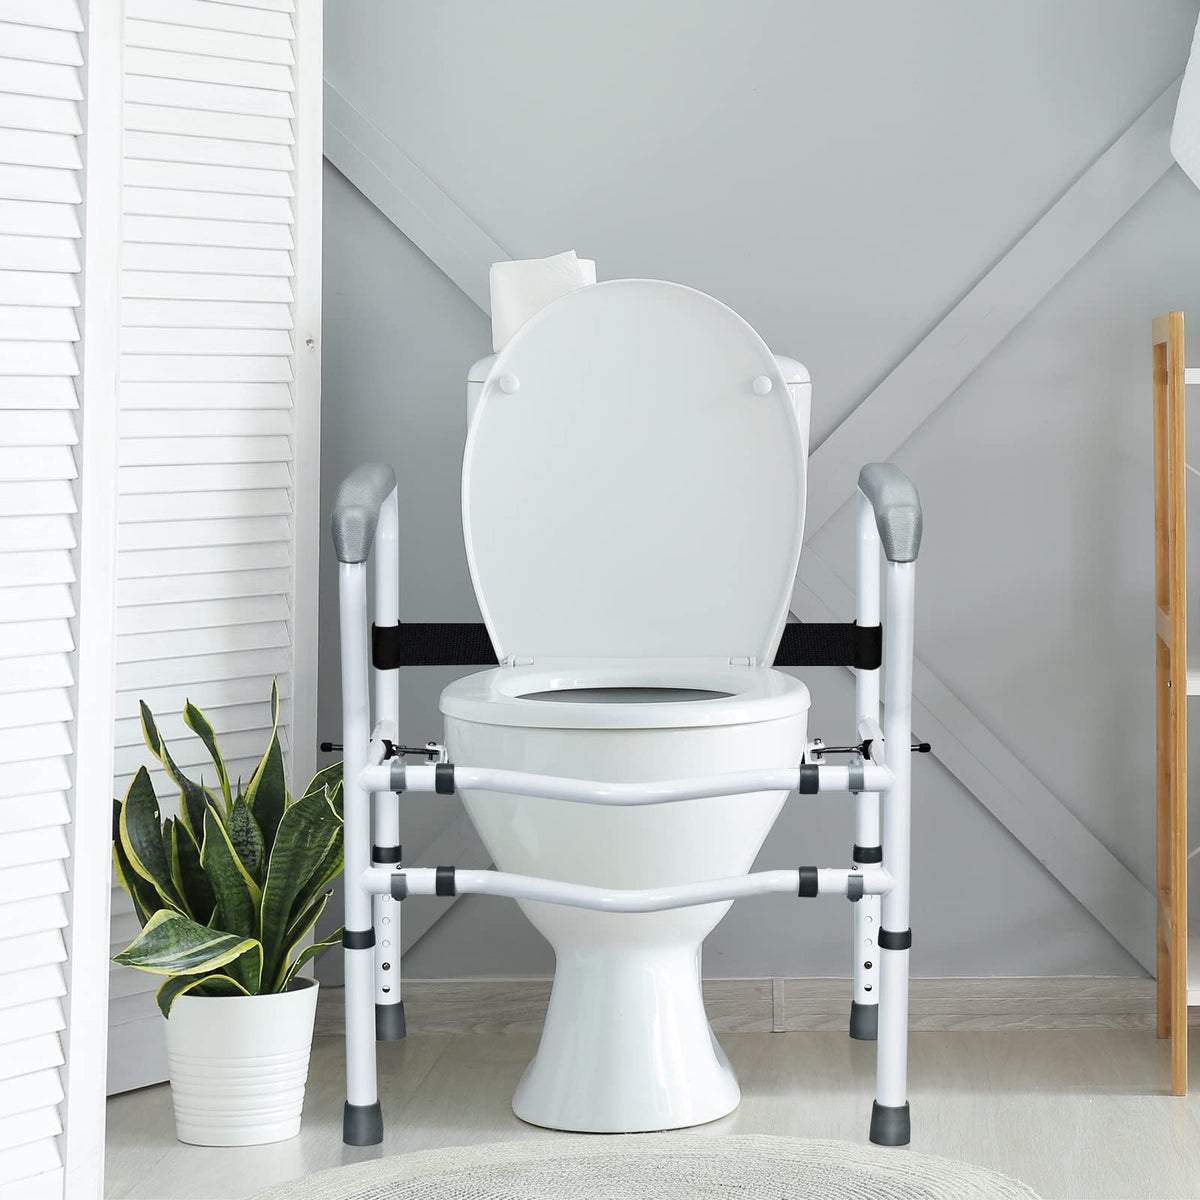 Giantex Toilet Safety Handrail, Upgraded Bathroom Grab Bars